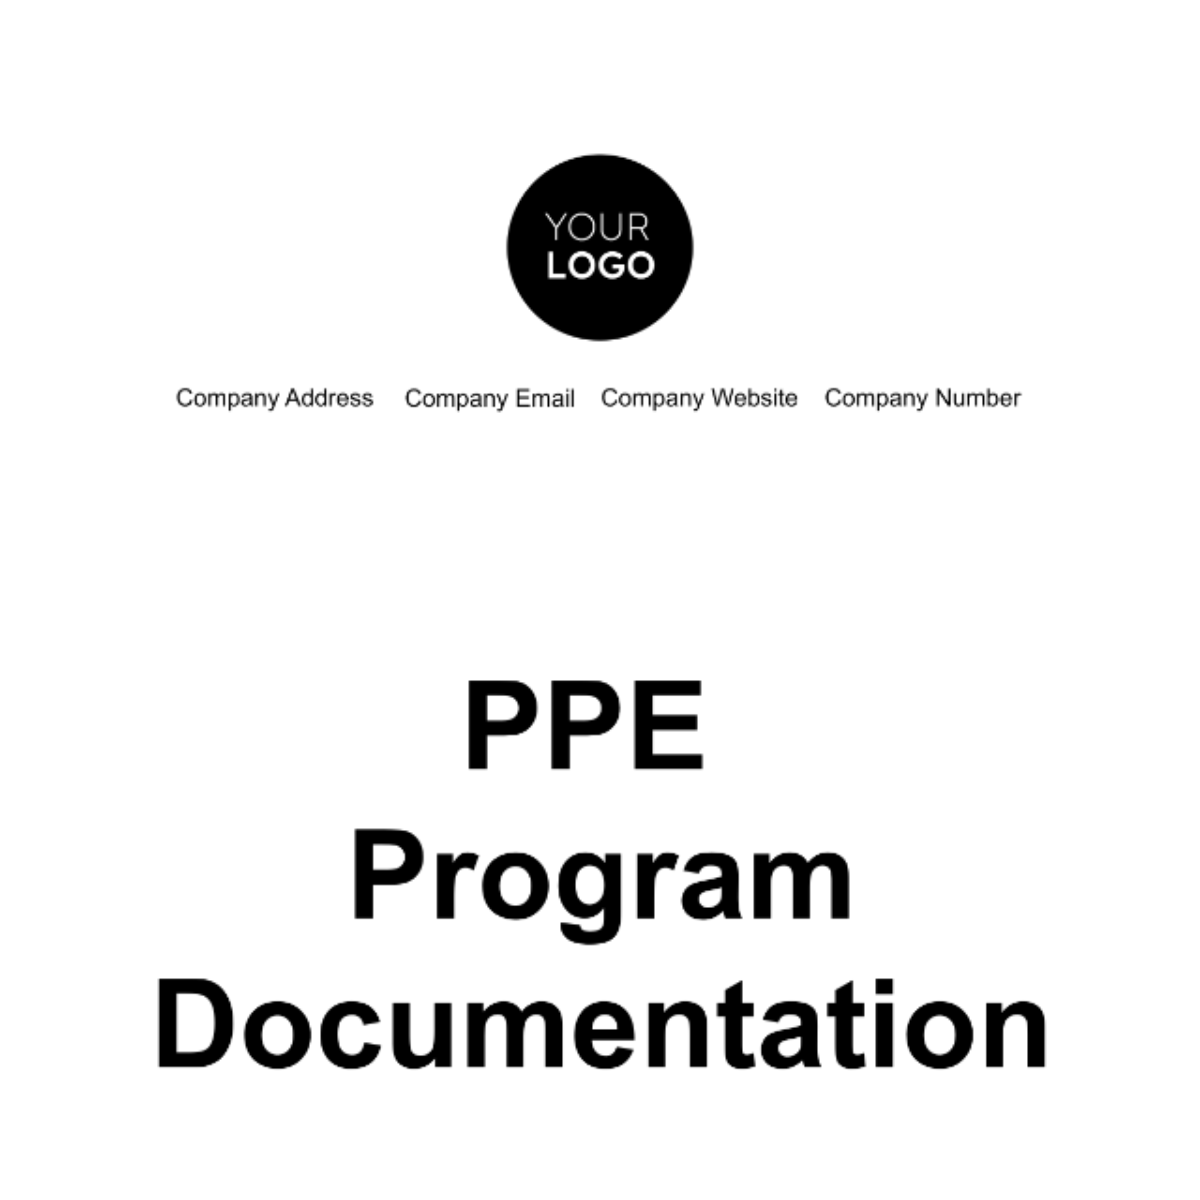 PPE Program Documentation Template